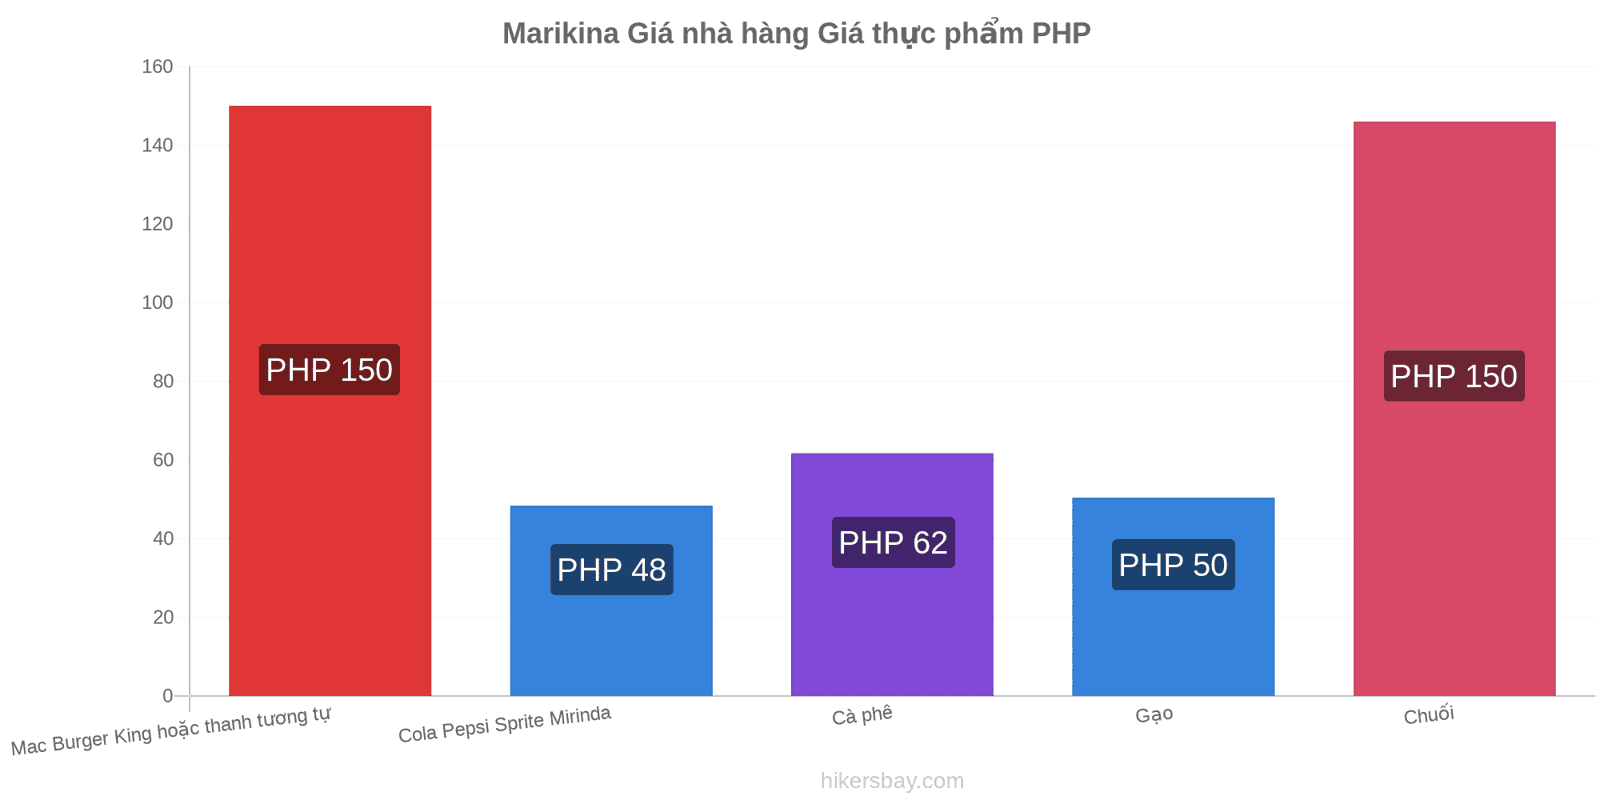 Marikina thay đổi giá cả hikersbay.com